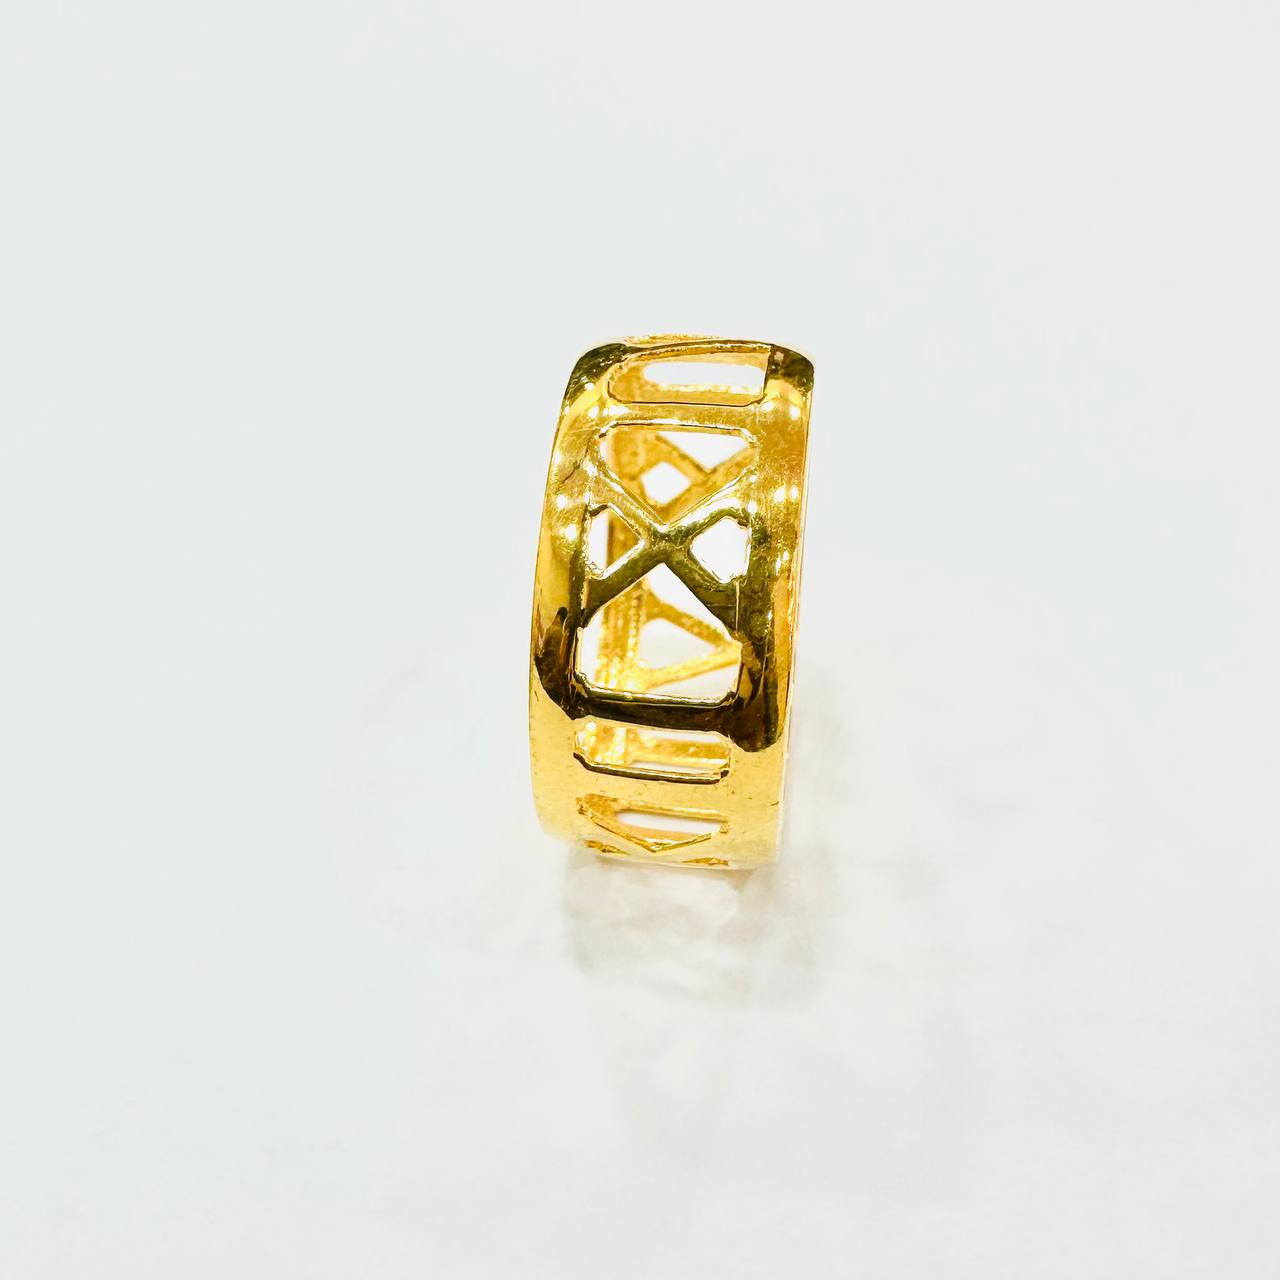 22k / 916 Gold Roman Ring Wide-916 gold-Best Gold Shop